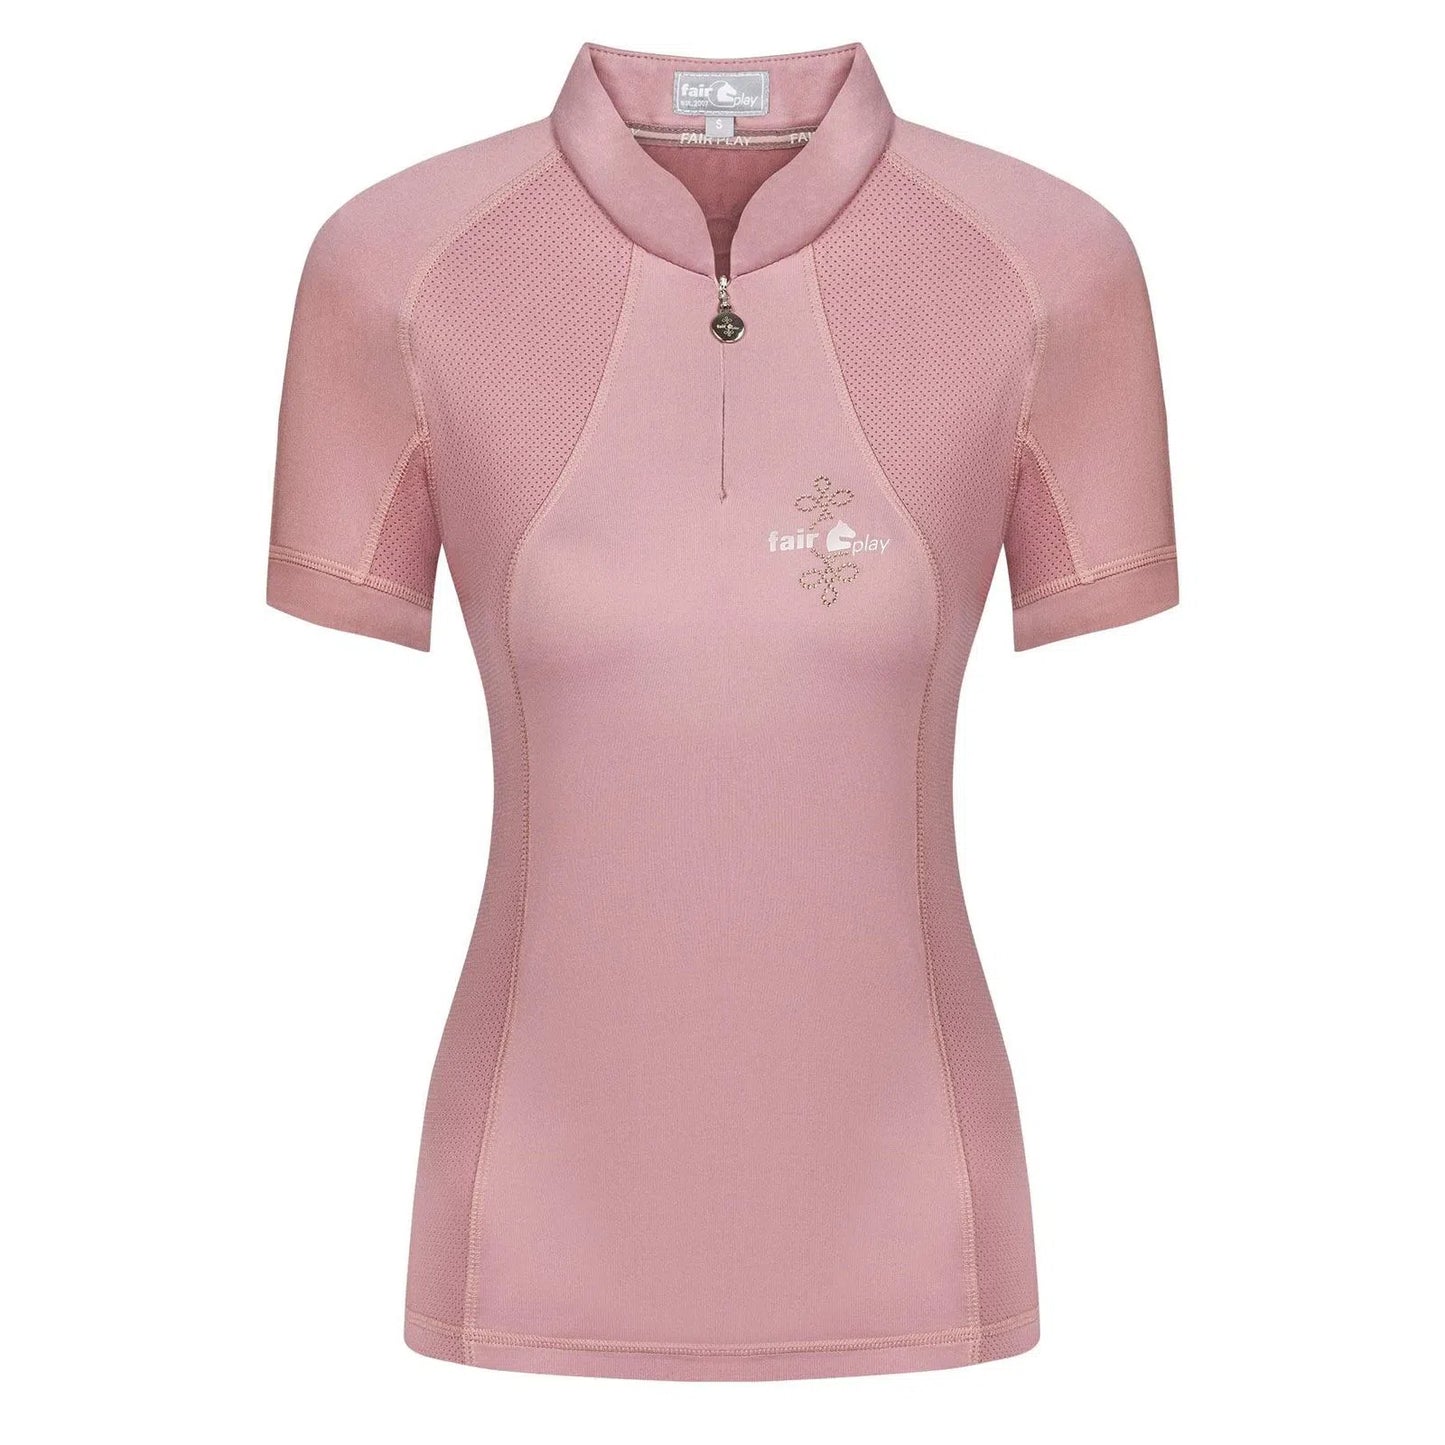 Fair Play Paula Short Sleeve Shirt - Dusty Pink